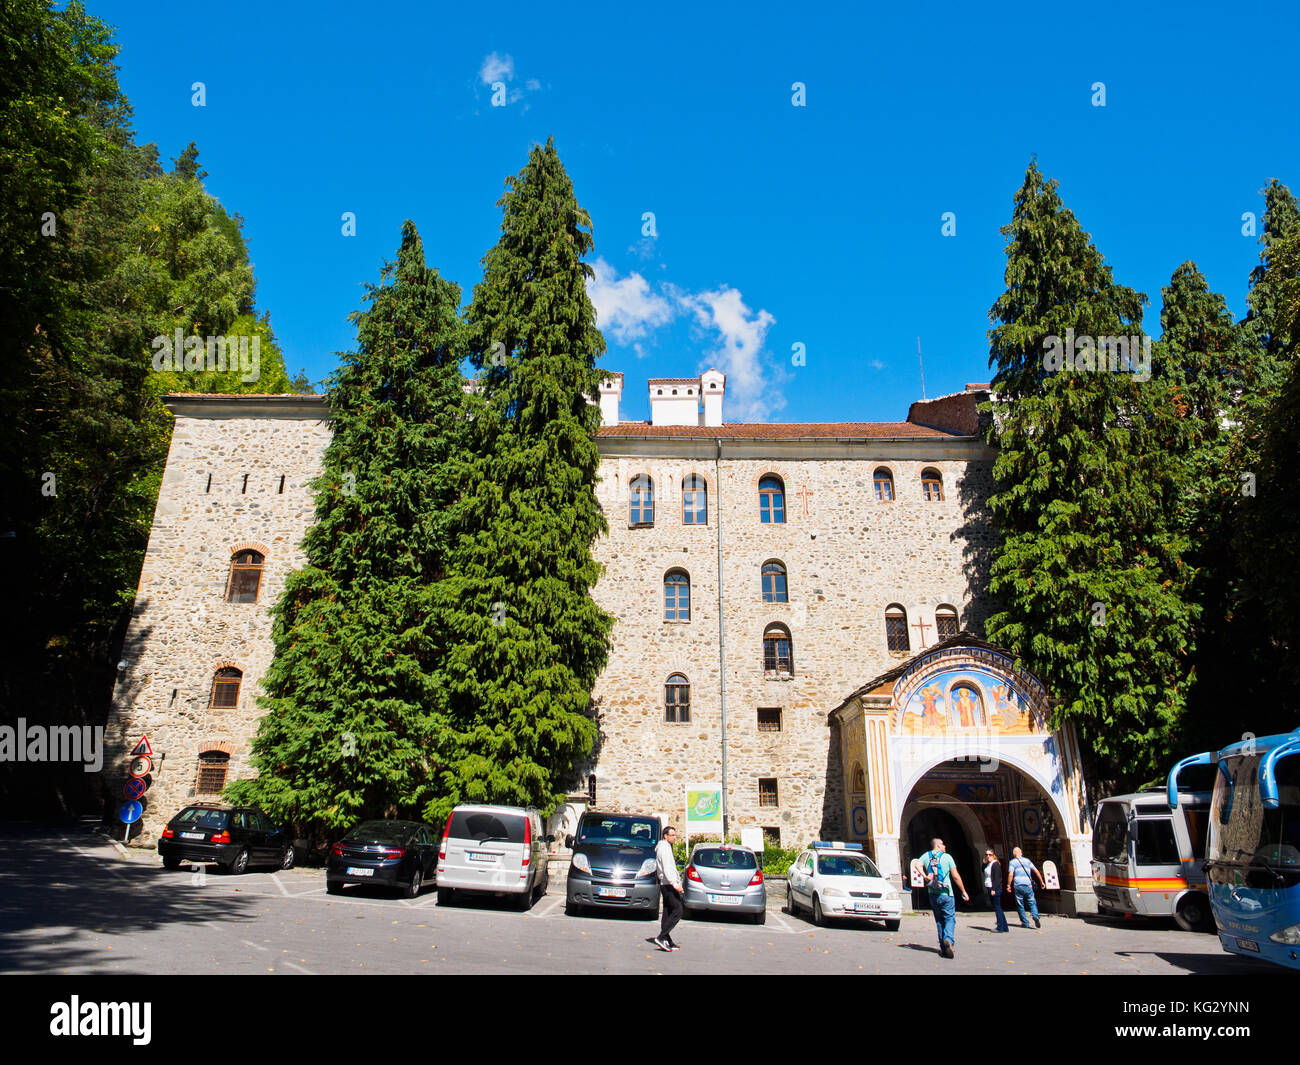 The front entrance of Rila Monastery, Bulgaria Stock Photo